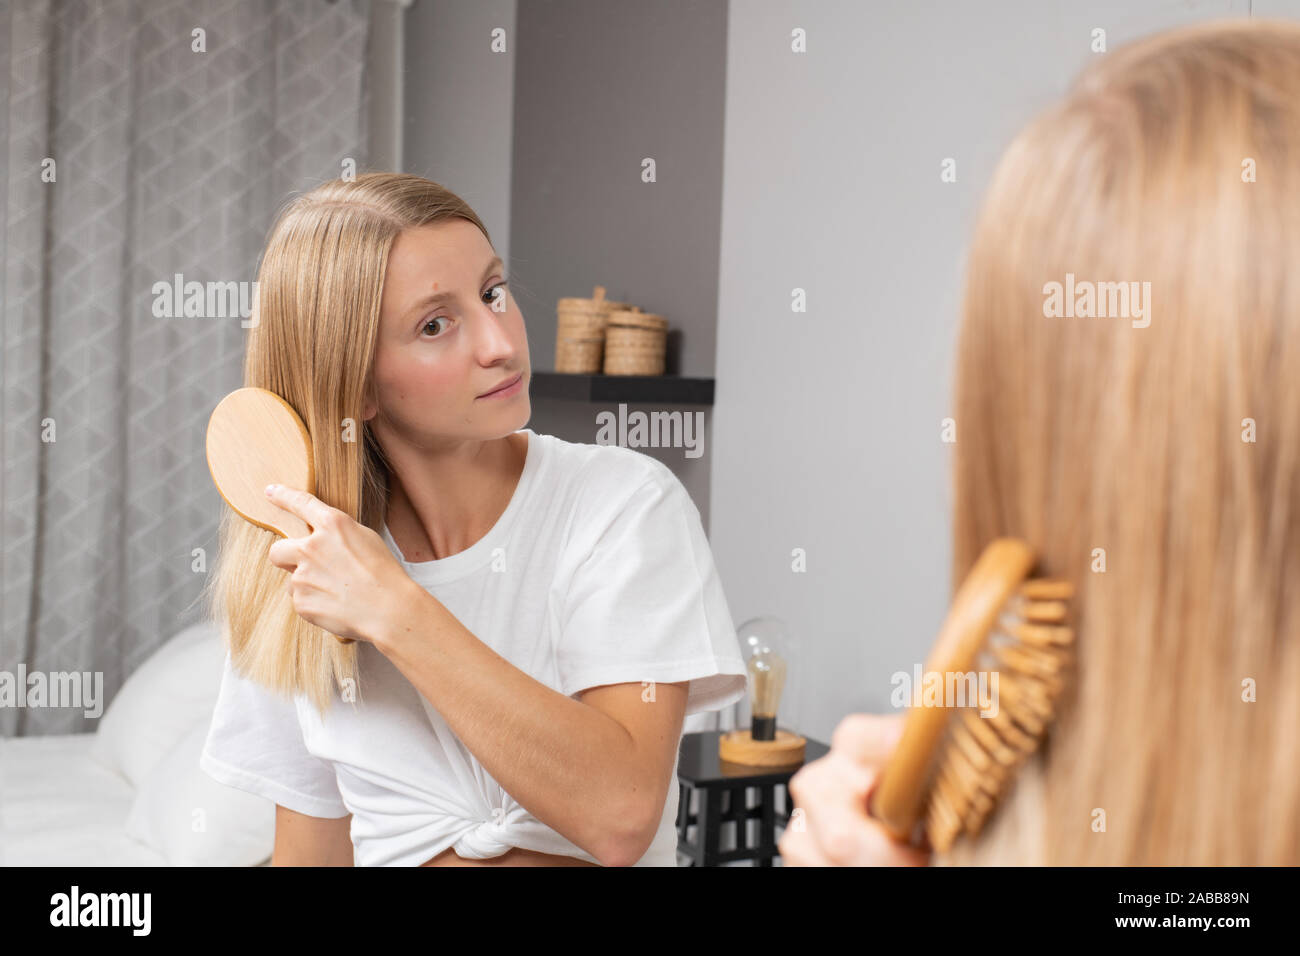 Beautiful Girl Combing Her Hair With Brush Blonde Woman Brushing